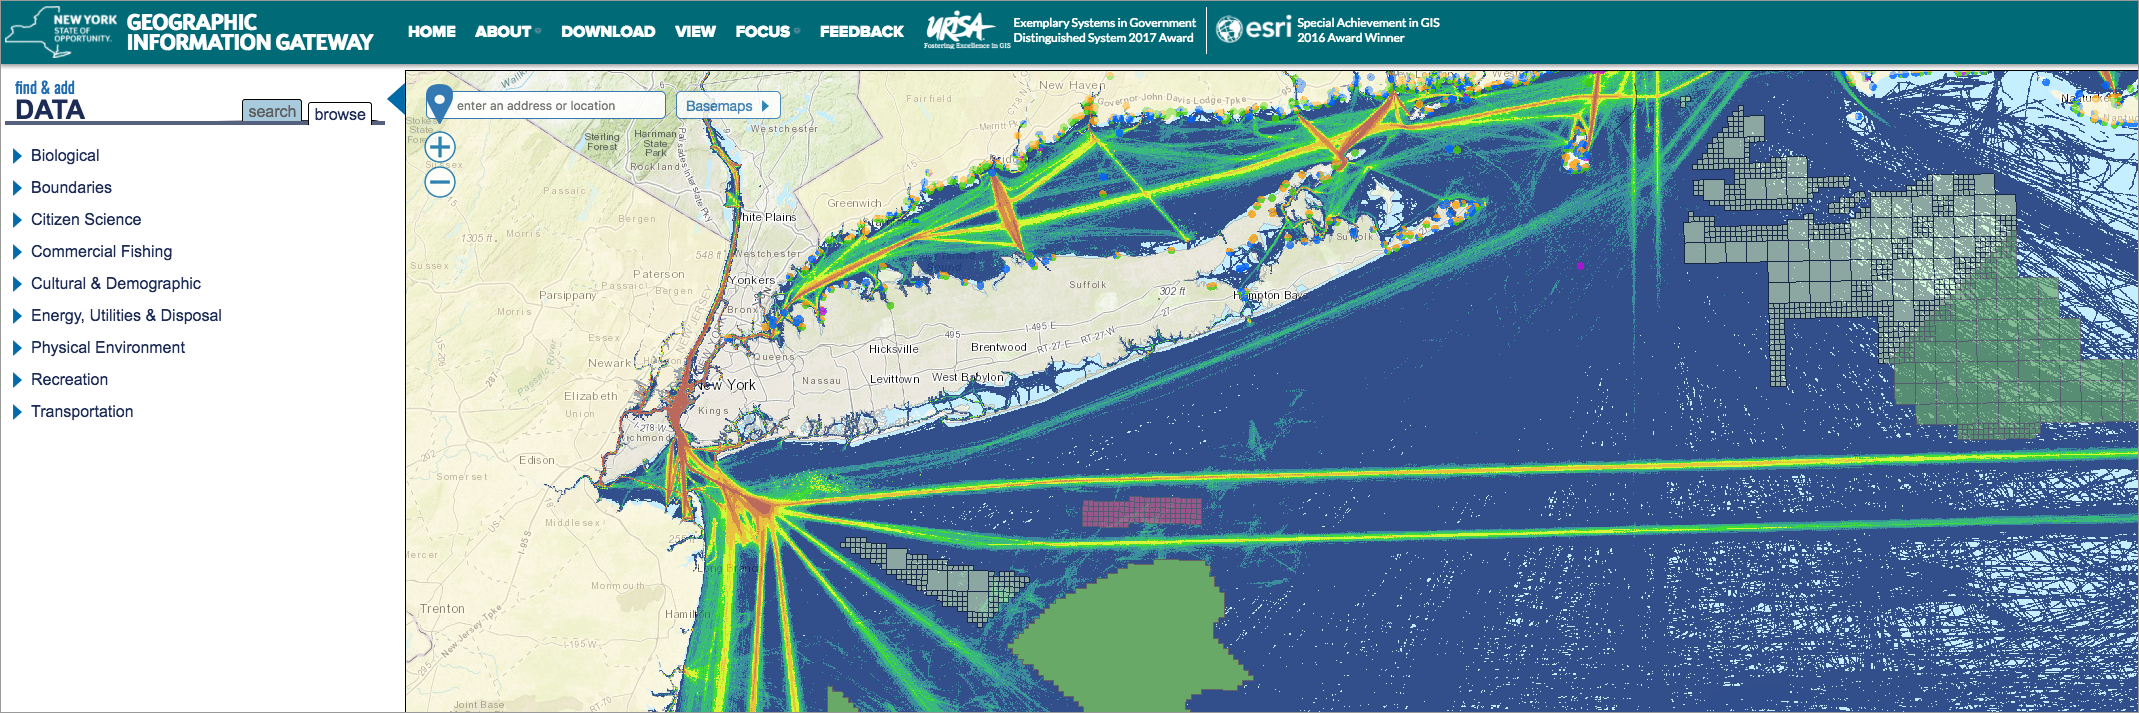 Screenshot of New York Geographic Information Gateway